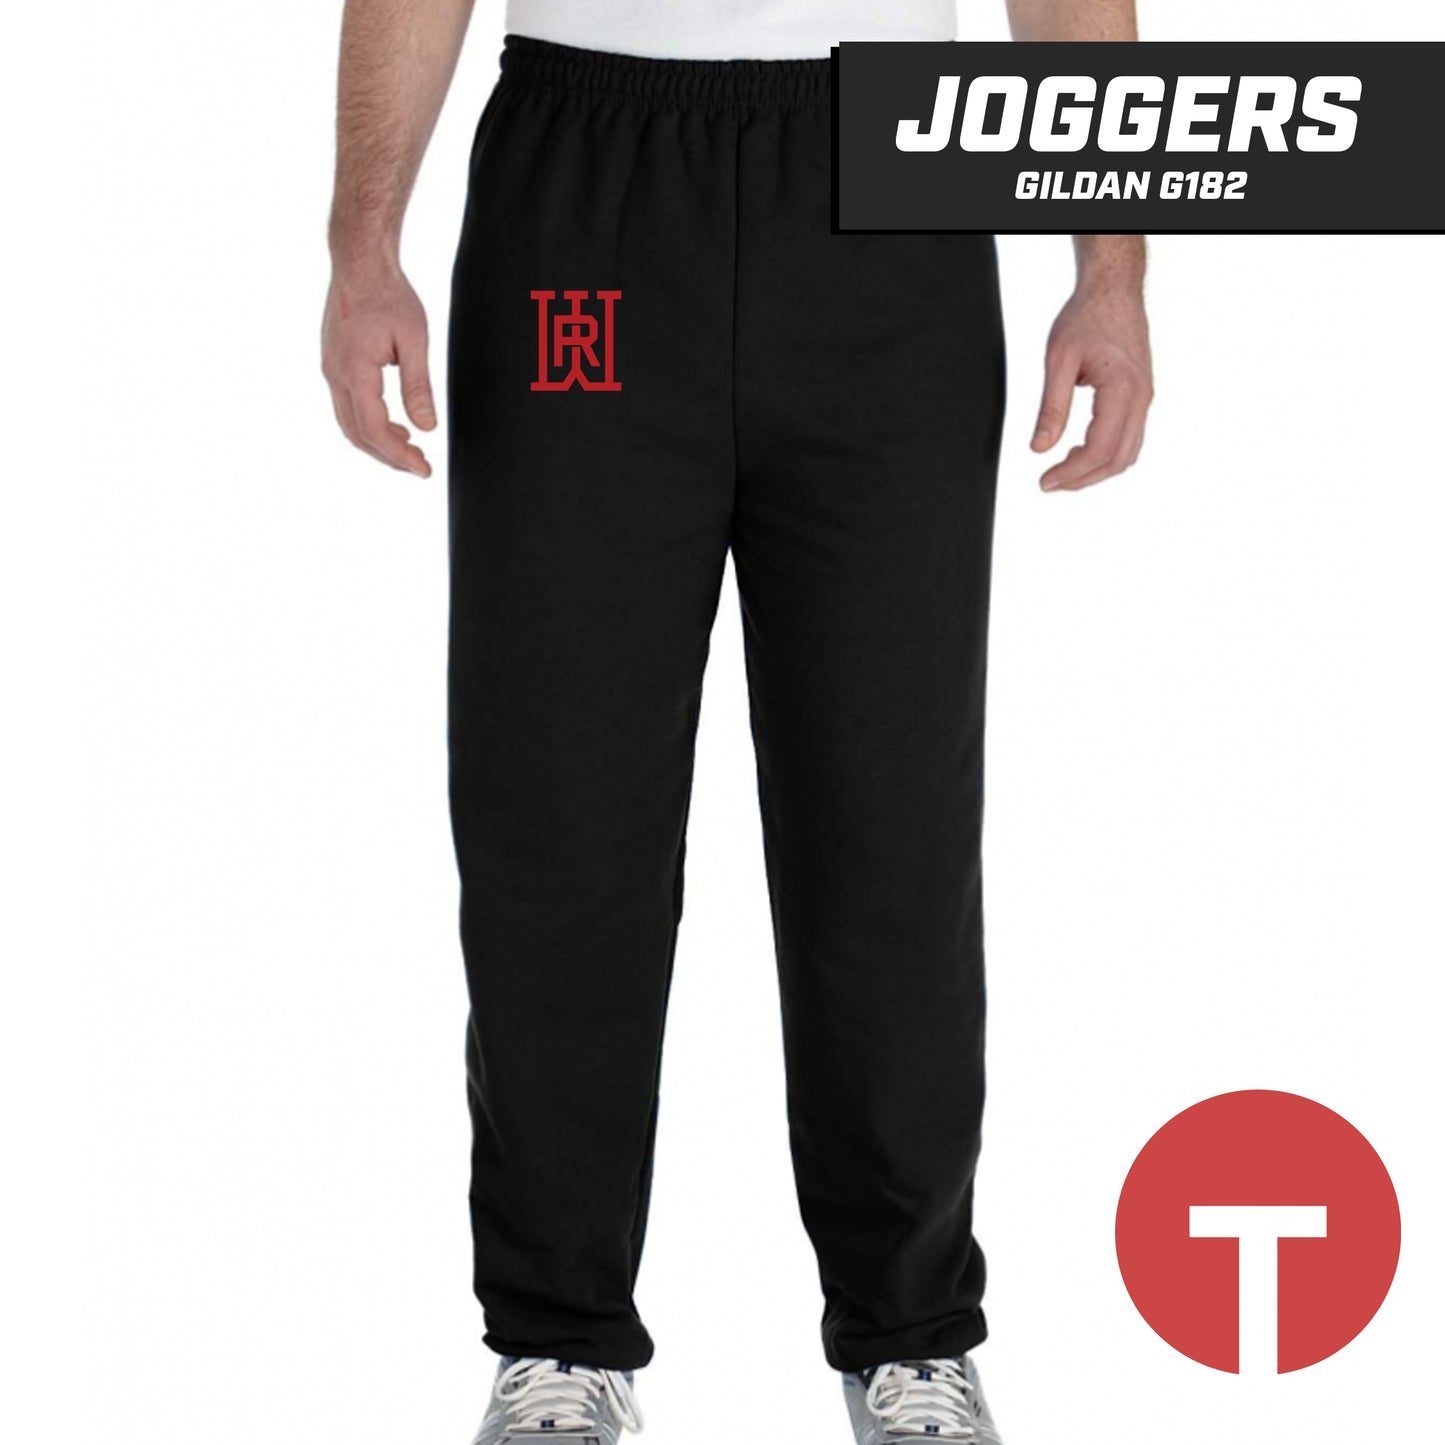 Rapids Baseball - Jogger pants Gildan G182 - LOGO 2